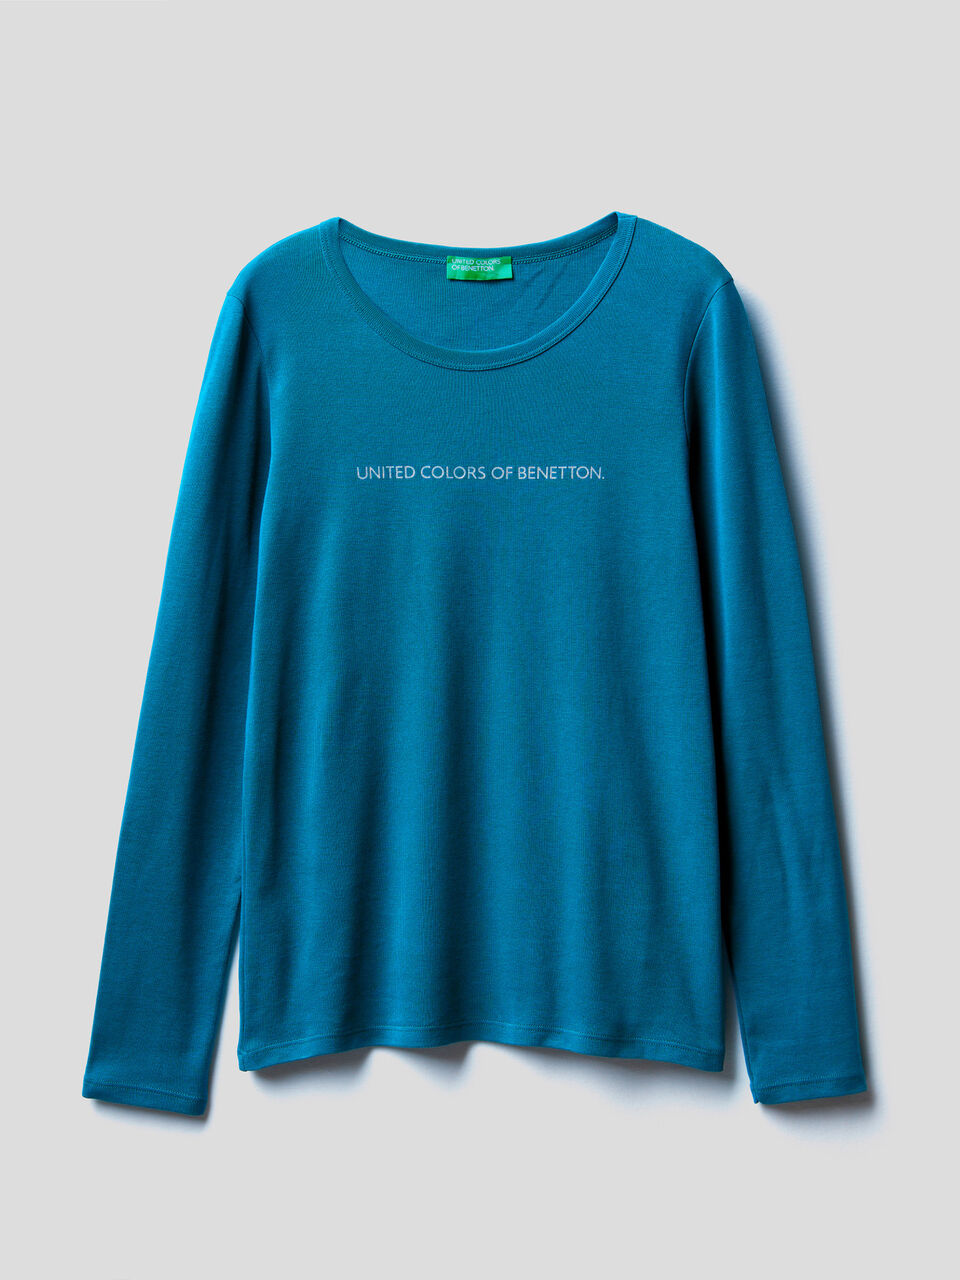 Camiseta manga larga 100% algodón · Carbón, Gris Verde, Azul Marino, Crudo,  Negro, Blanco Óptico · Camisetas